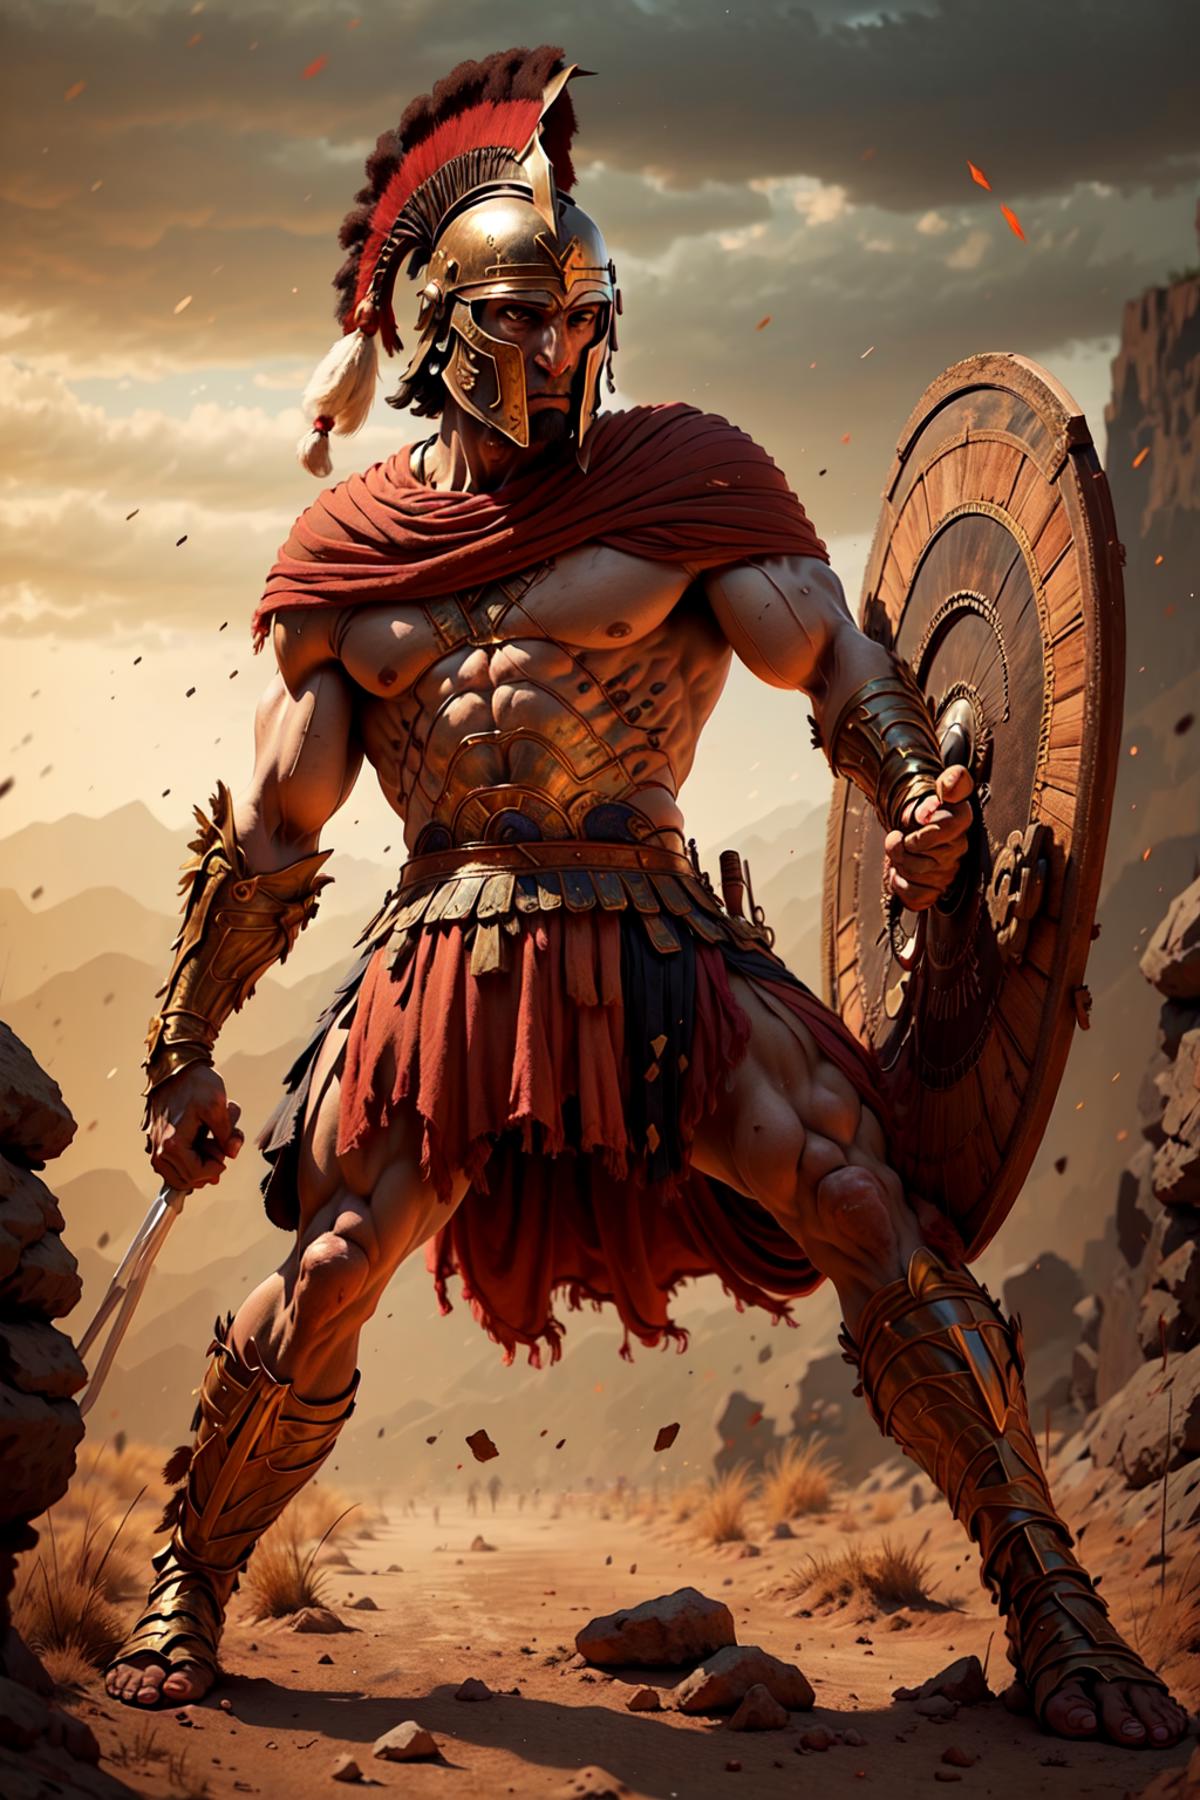 Spartan image by LDWorksDervlex